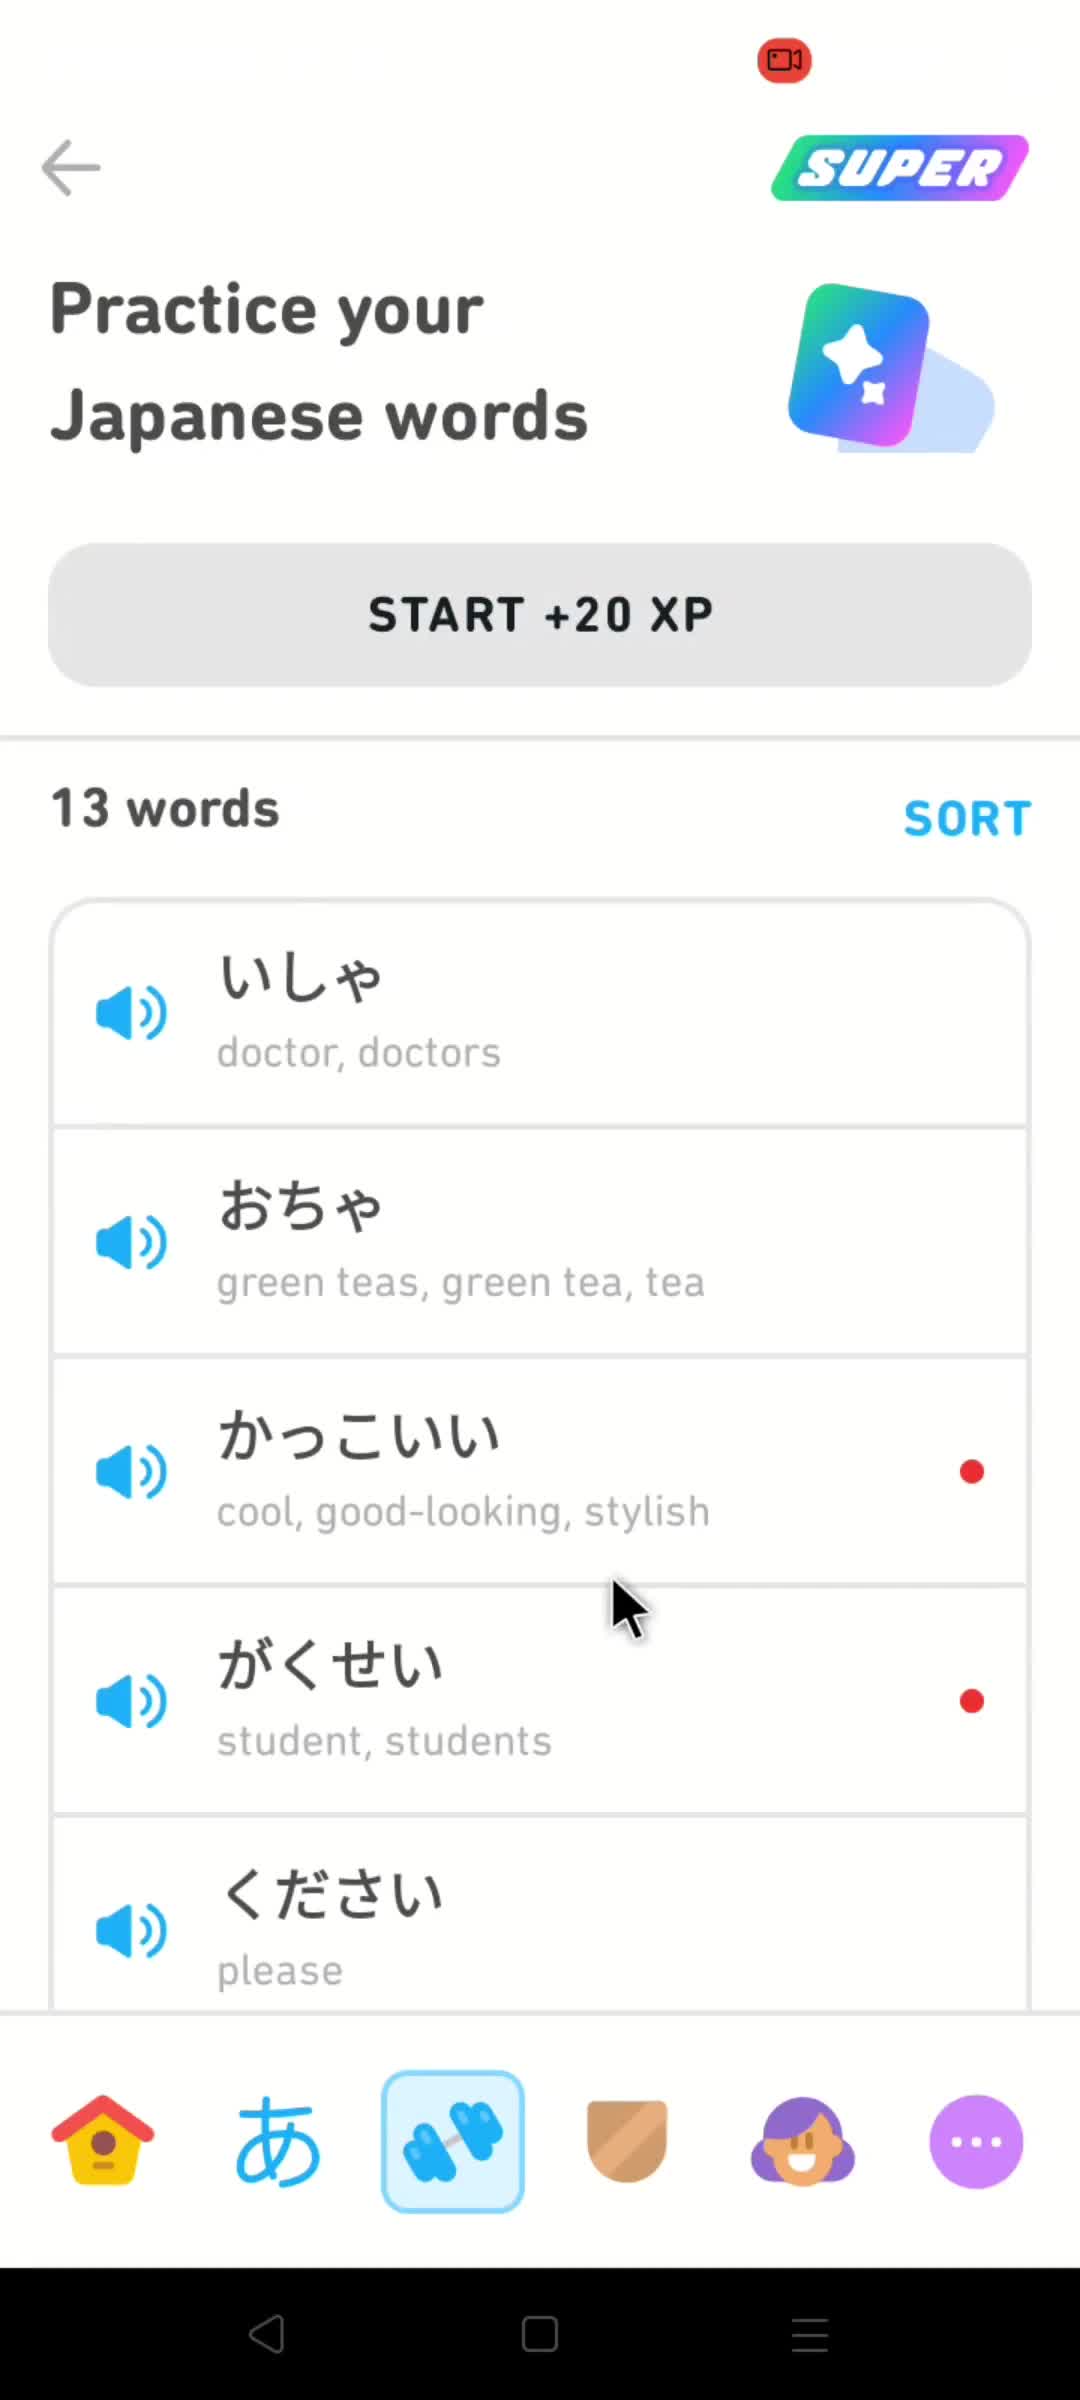 Duolingo filtered results screenshot